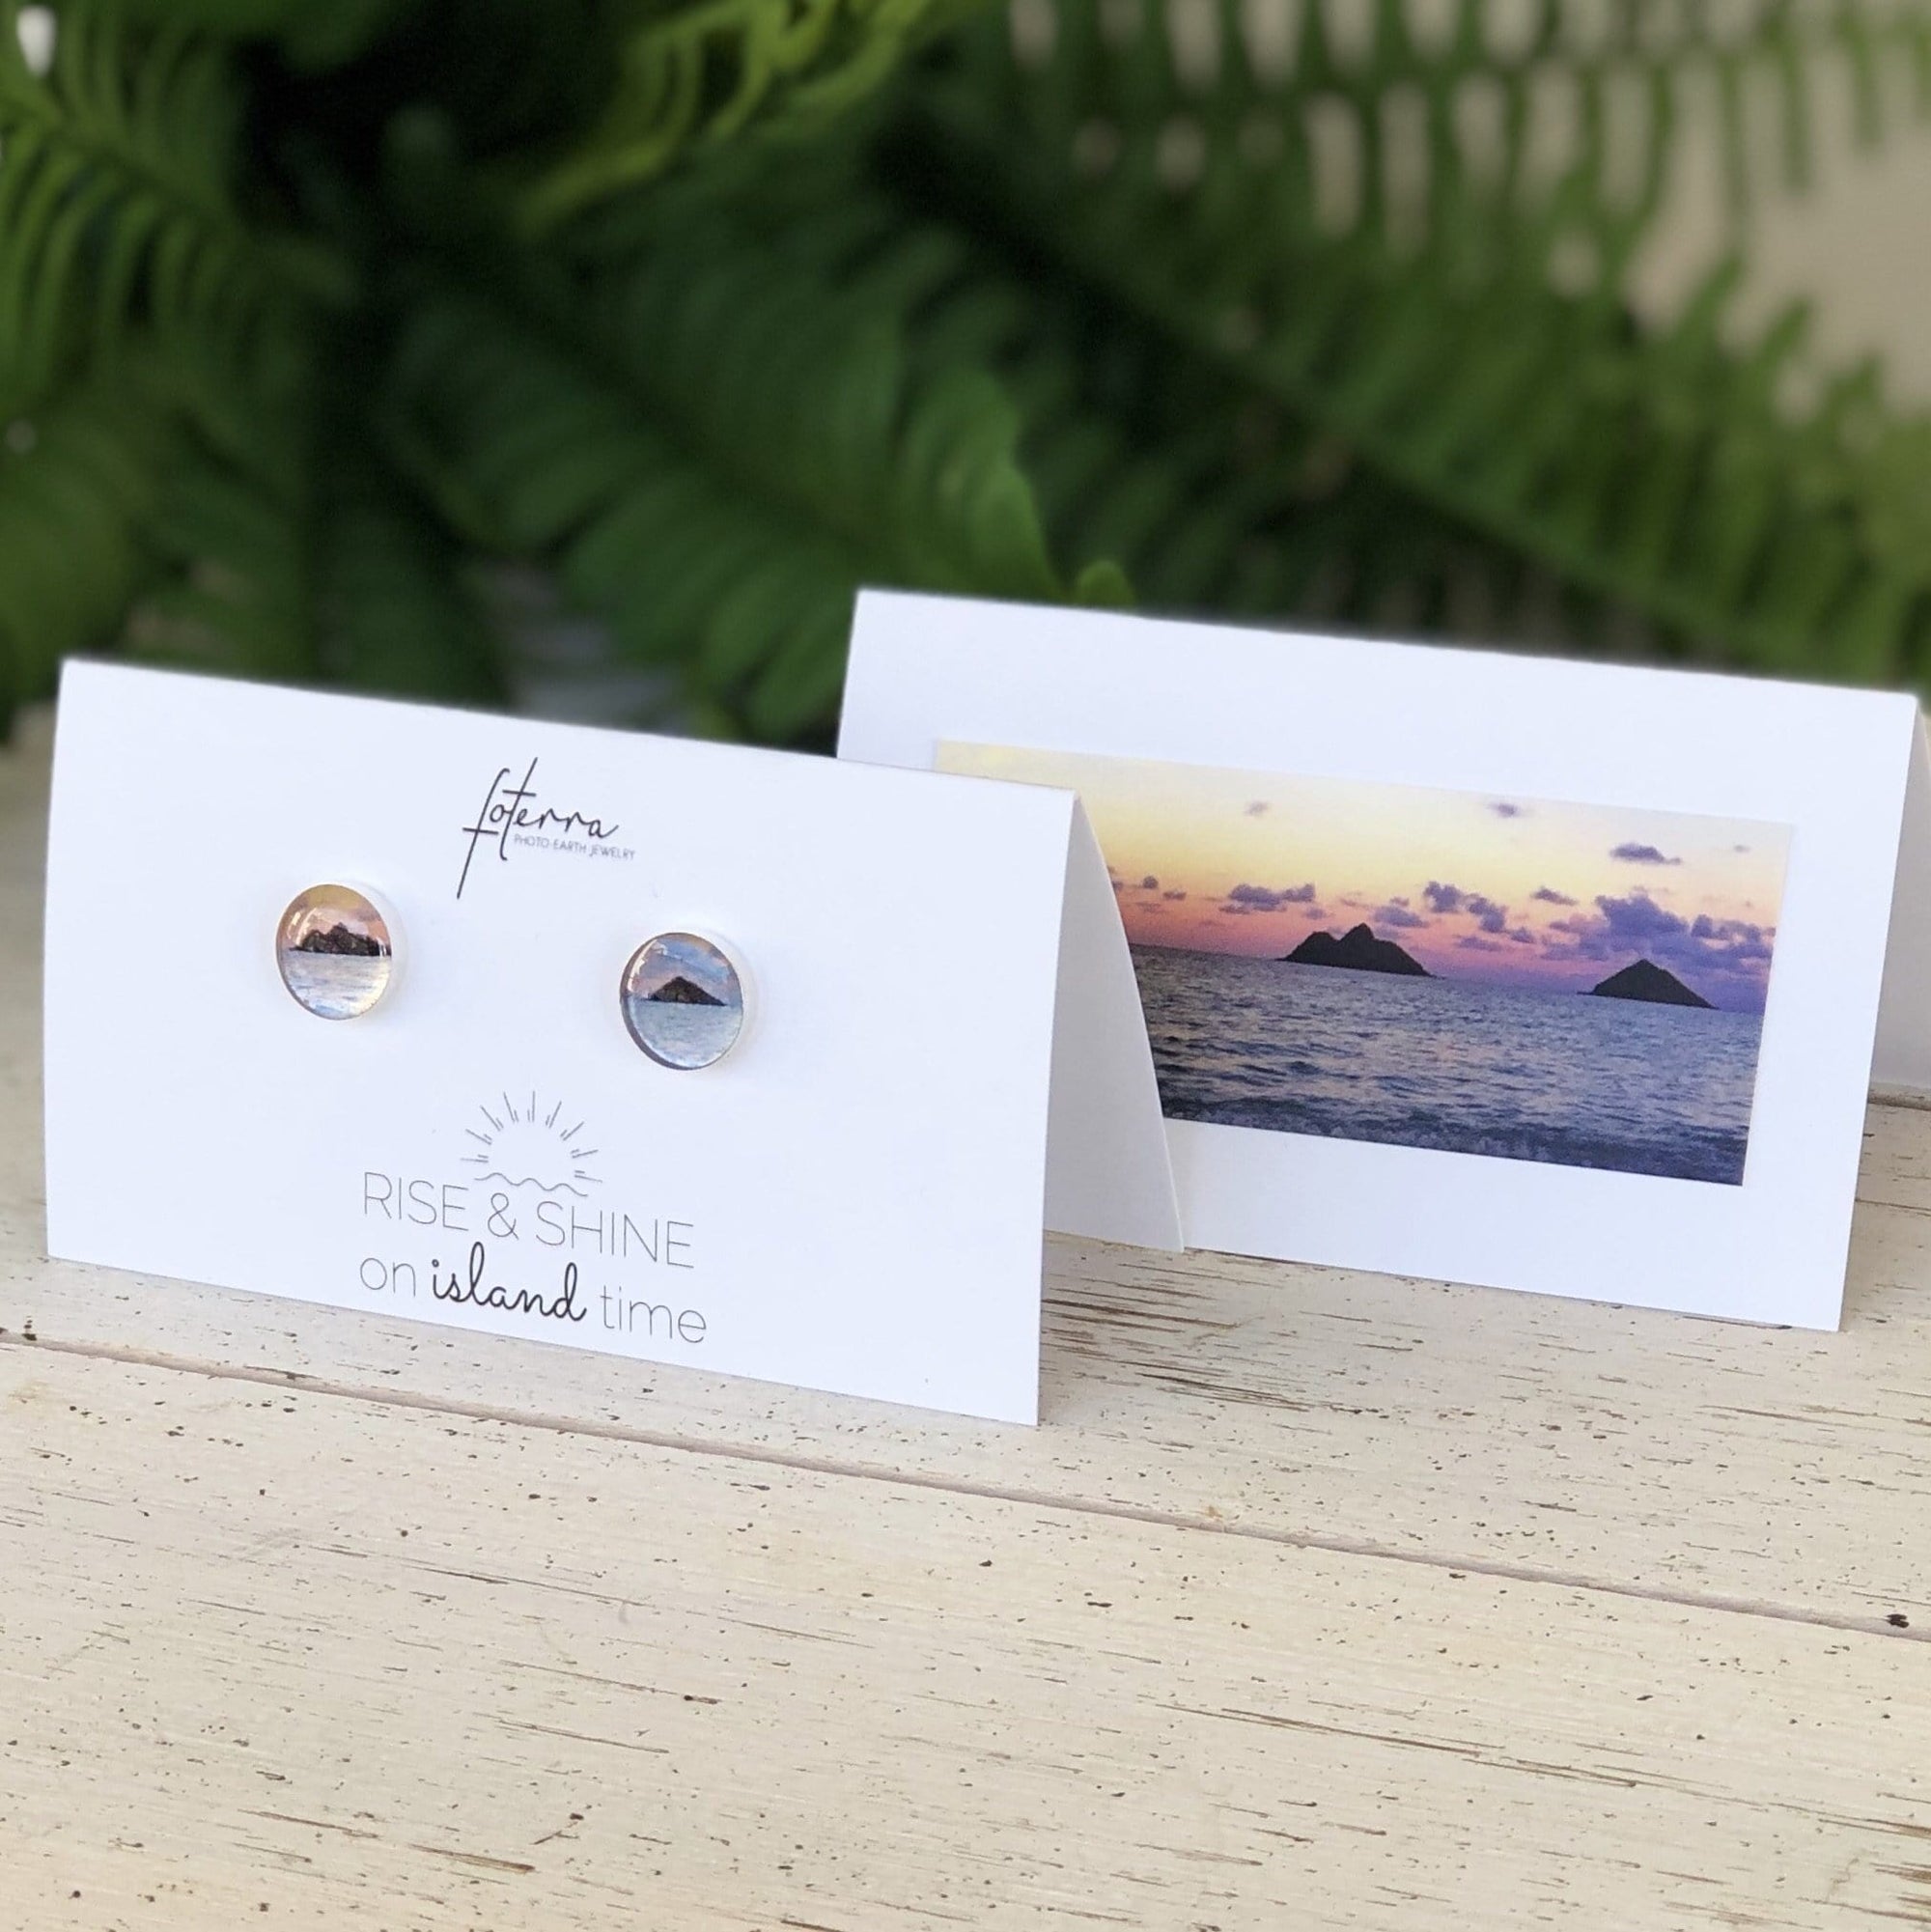 Mokulua Island Post Earrings featuring Lanikai, Oahu